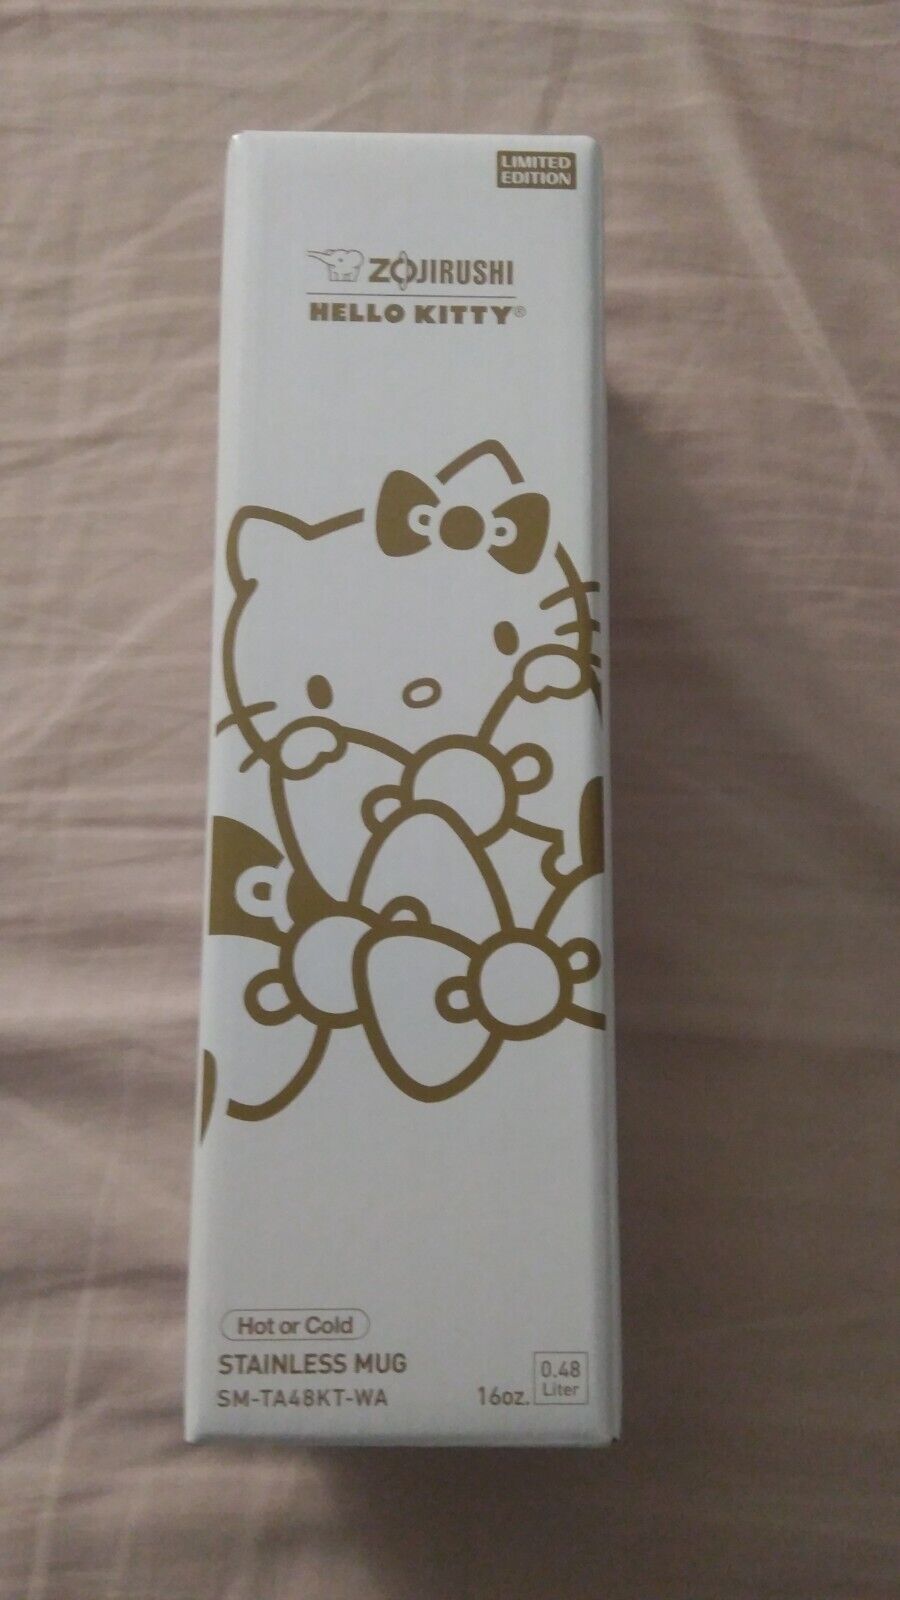 Zojirushi Hello Kitty Limited Edition Stainless Mug 16oz. 0.48L Pearl White